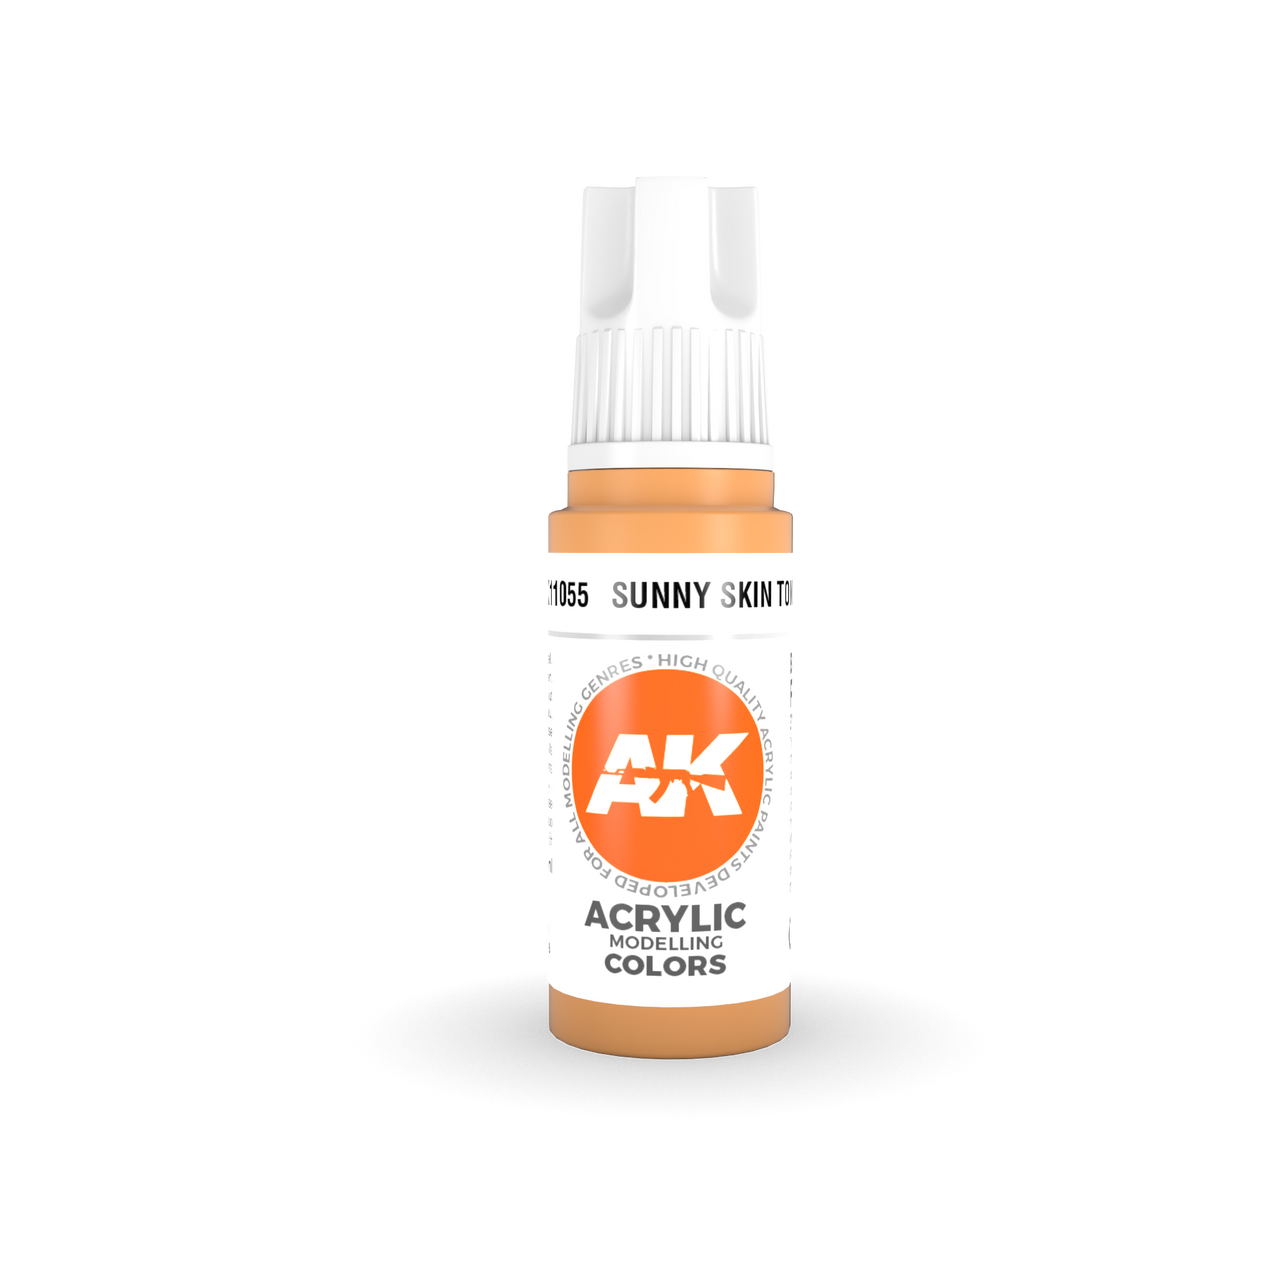 Sunny Skin Tone - AK 3Gen Acrylic